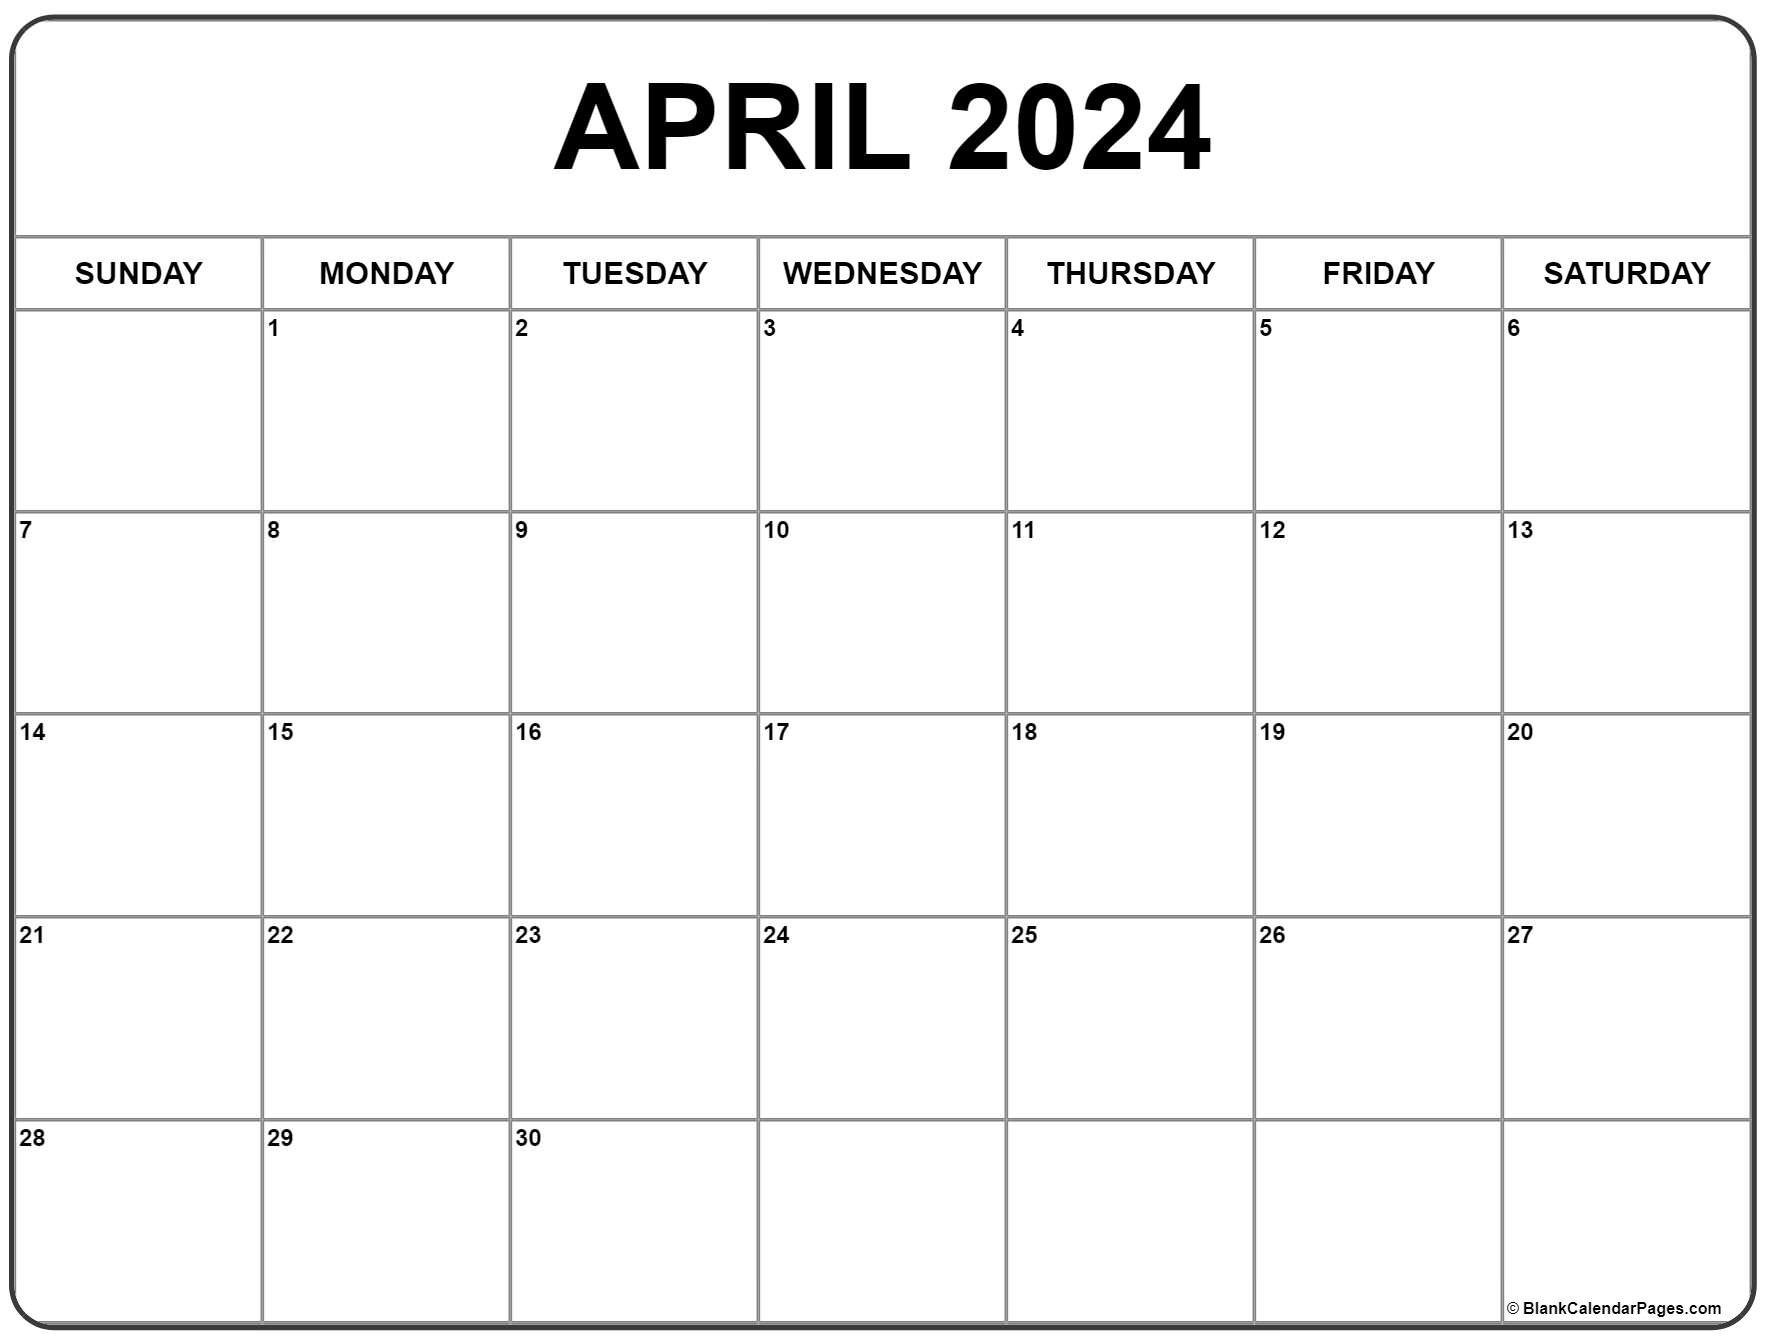 April 2024 Calendar | Free Printable Calendar for Printable 2024 Calendar April